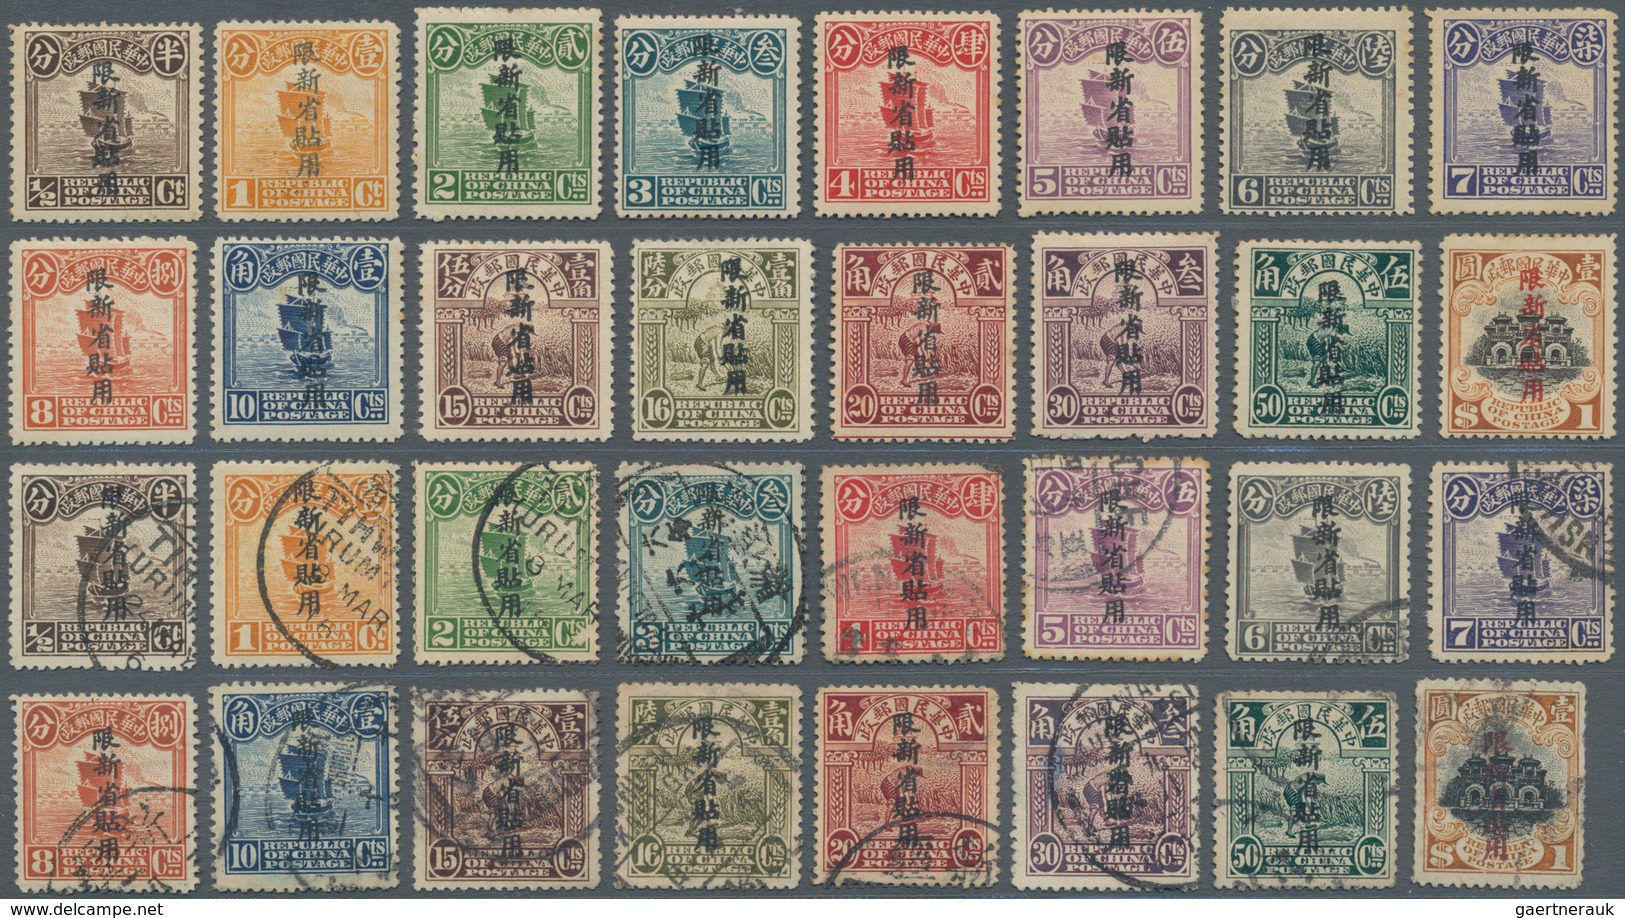 China - Provinzausgaben - Sinkiang (1915/45): 1915, Ovpt. Type I 1/2 C.-$1 Cpl. Set, Unused Mounted - Sinkiang 1915-49